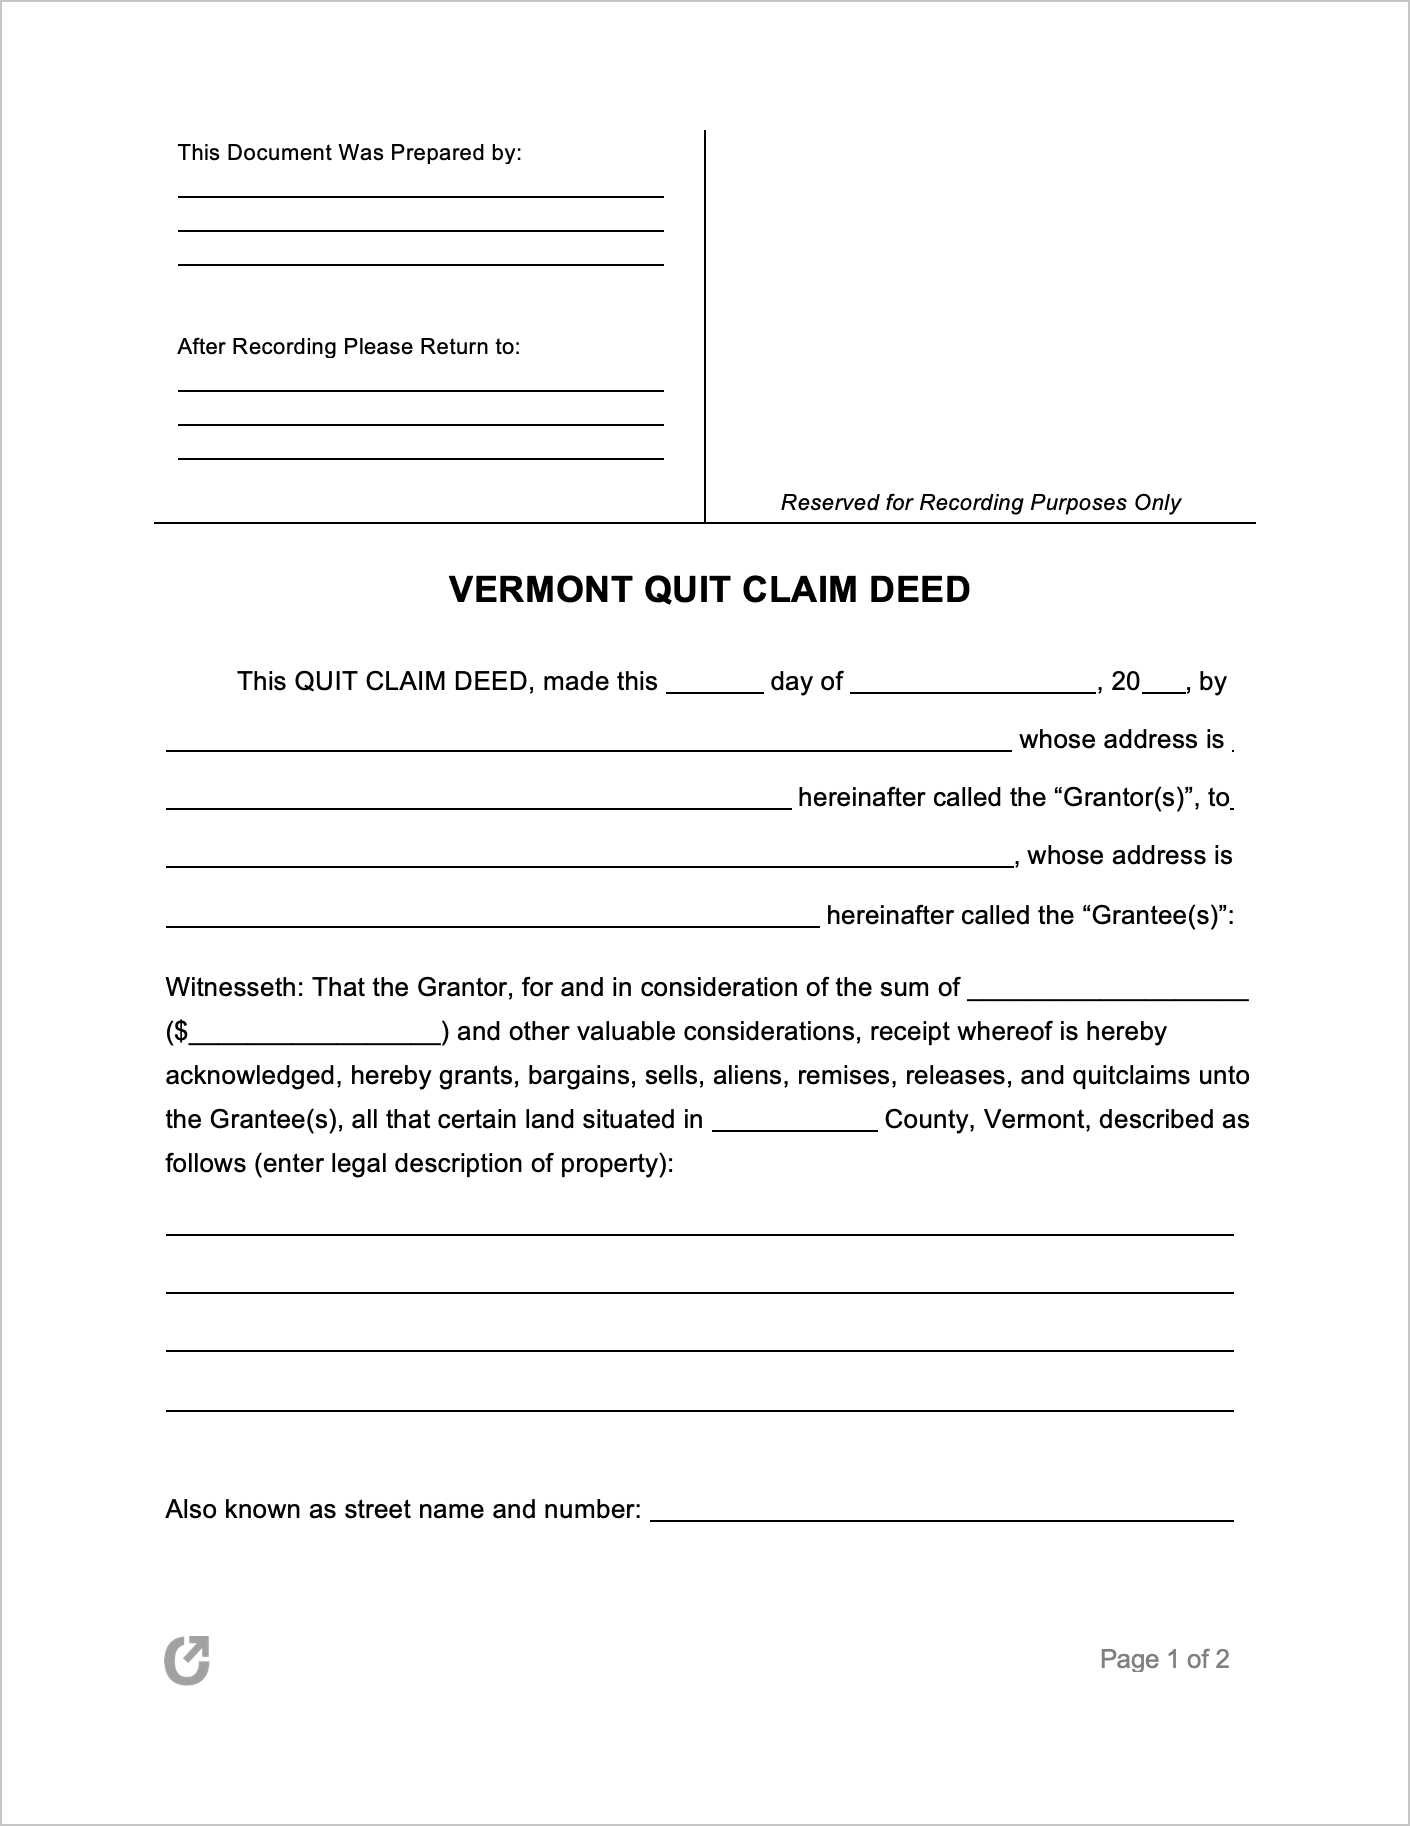 free-vermont-quit-claim-deed-form-pdf-word